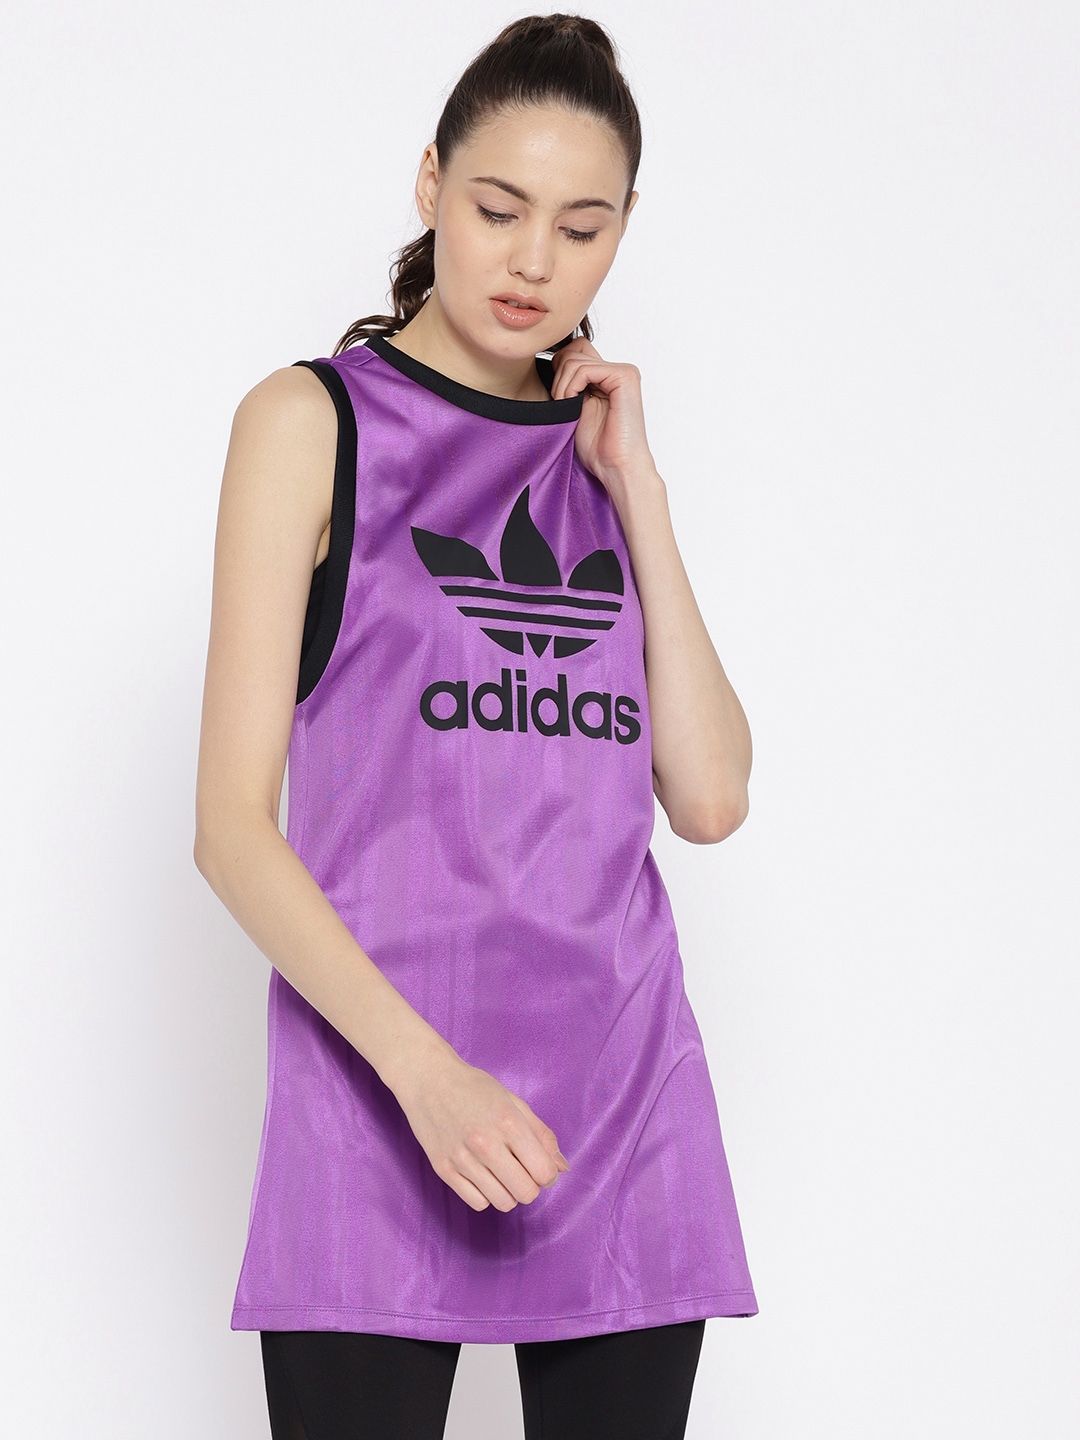 adidas dress purple